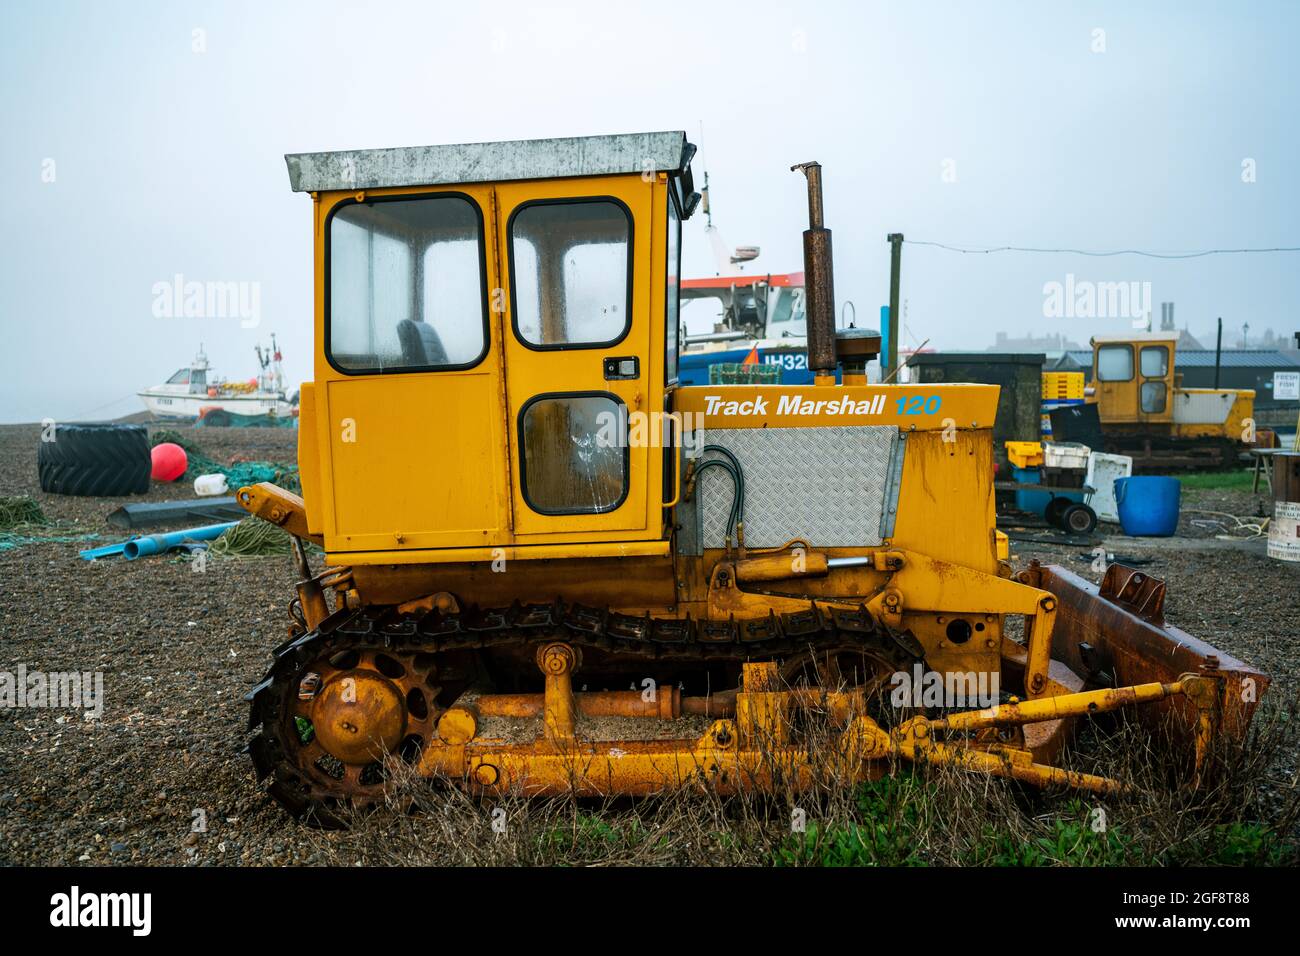 Track Marshall bulldozer used in the fishing industry Aldeburgh Suffolk UK Stock Photo